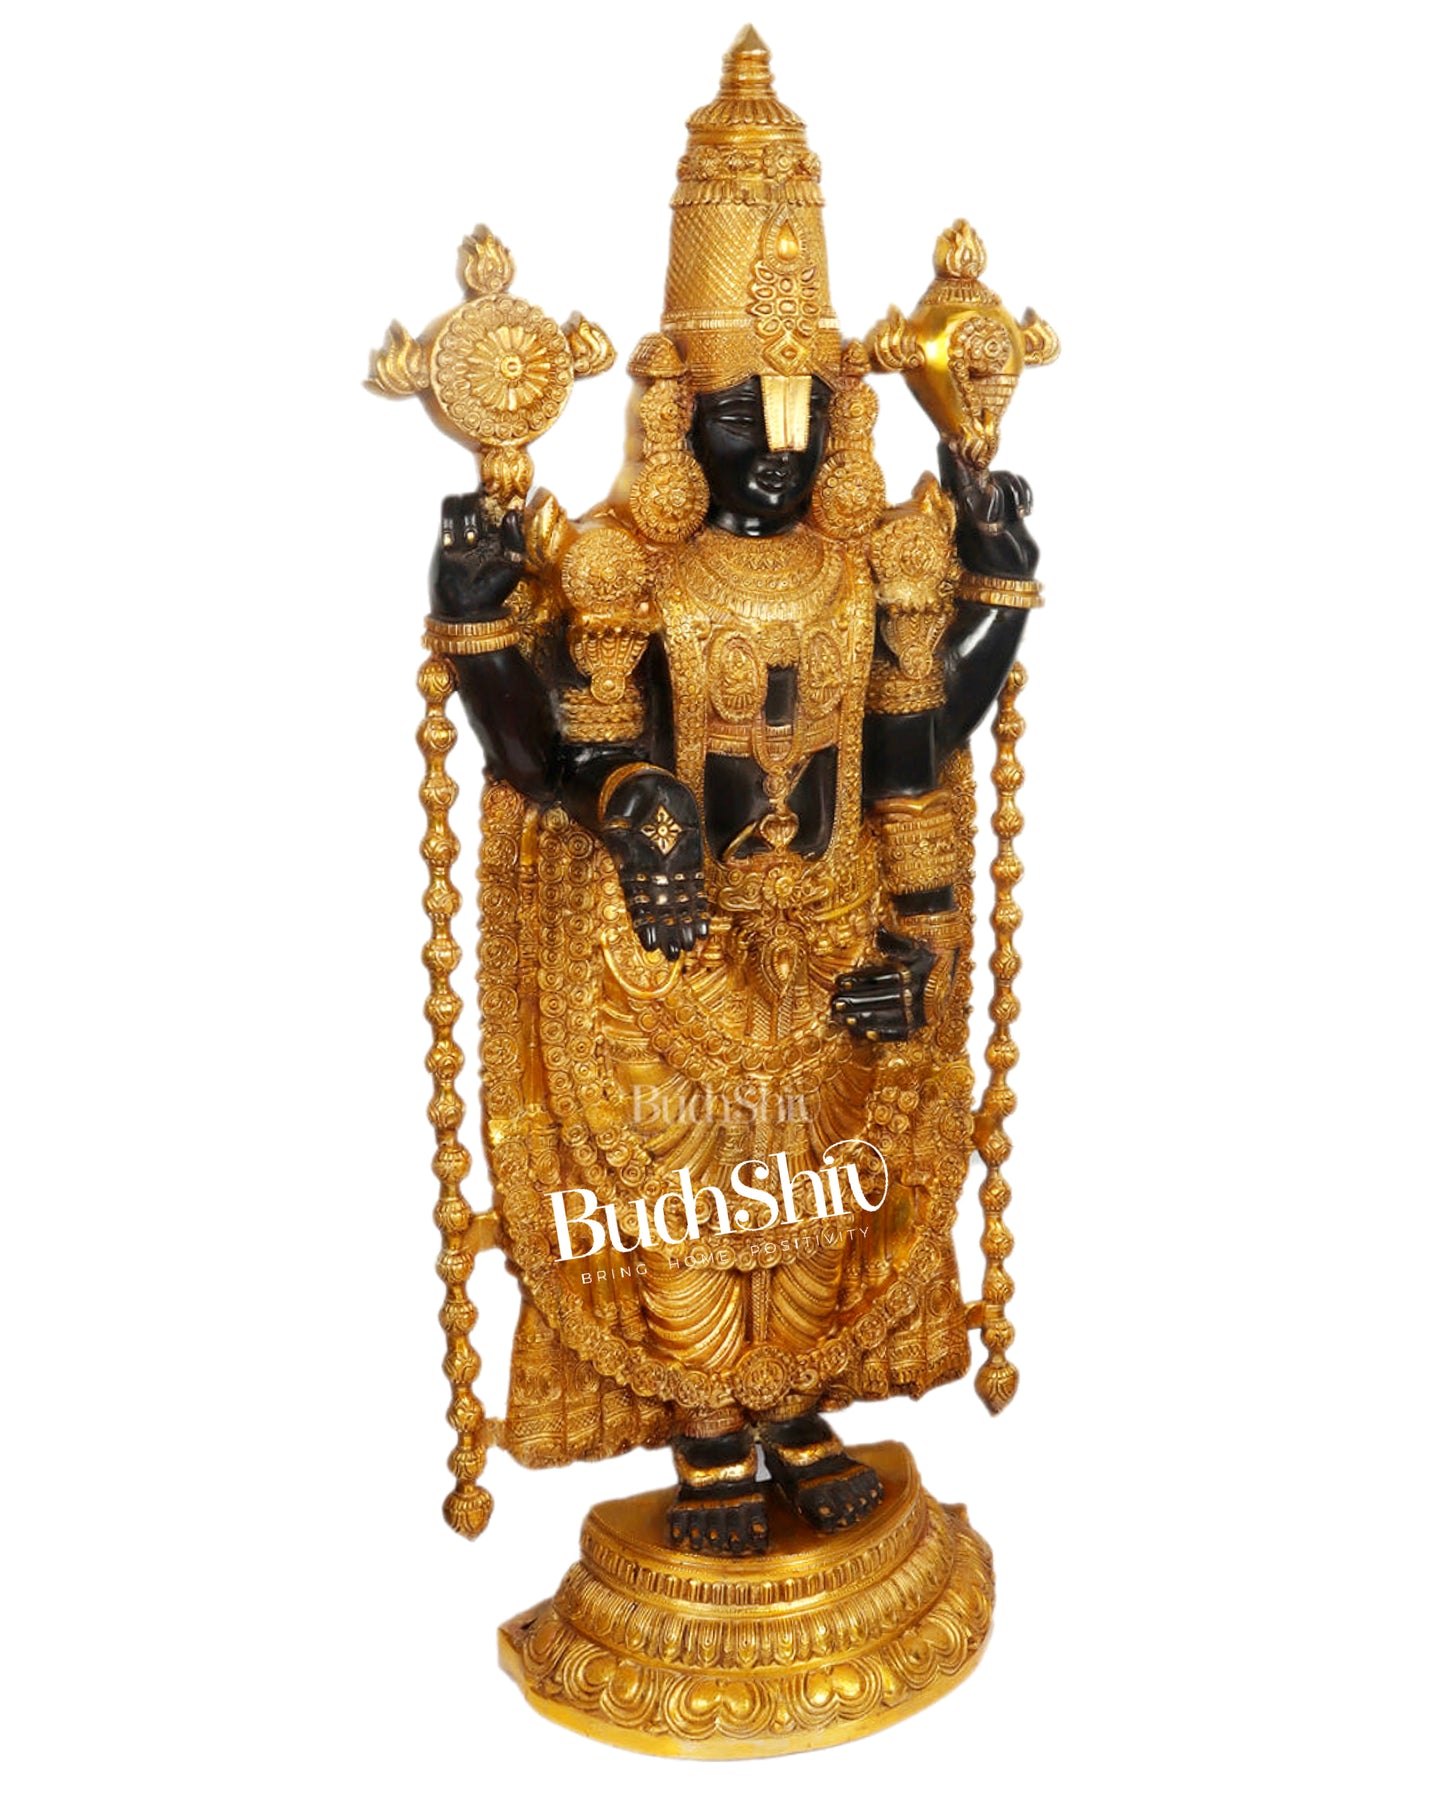 Superfine Brass Lord Venkateshwara Idol side angle 4 feet 48 inch statue murti large